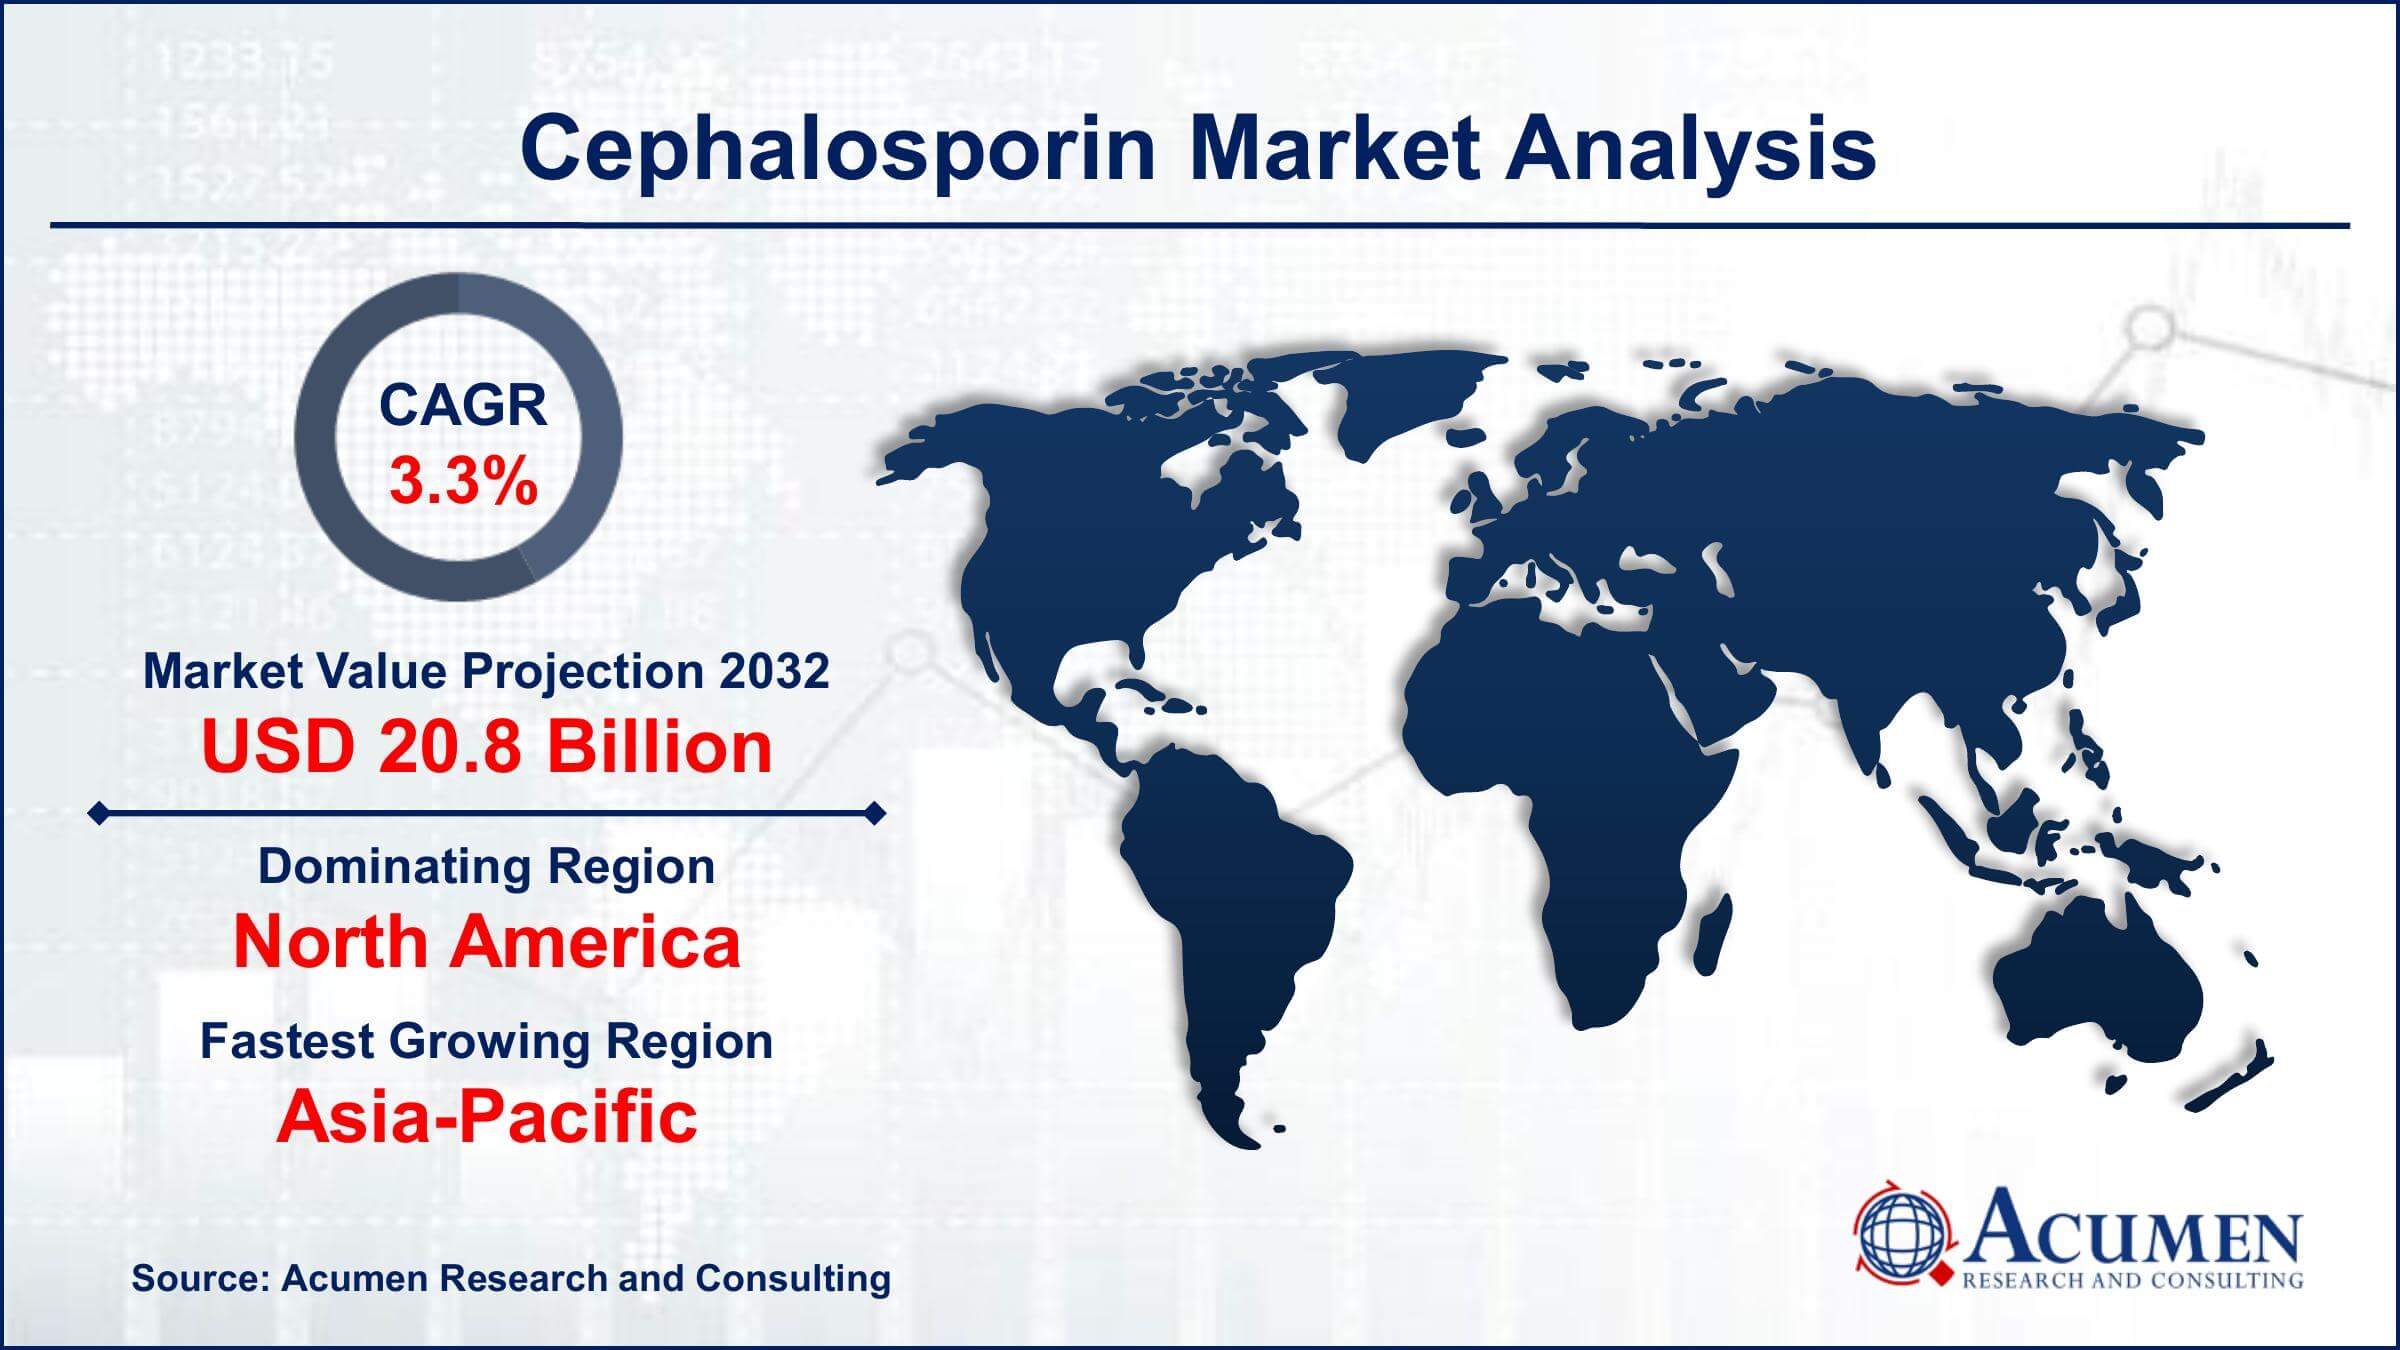 Global Cephalosporin Market Trends